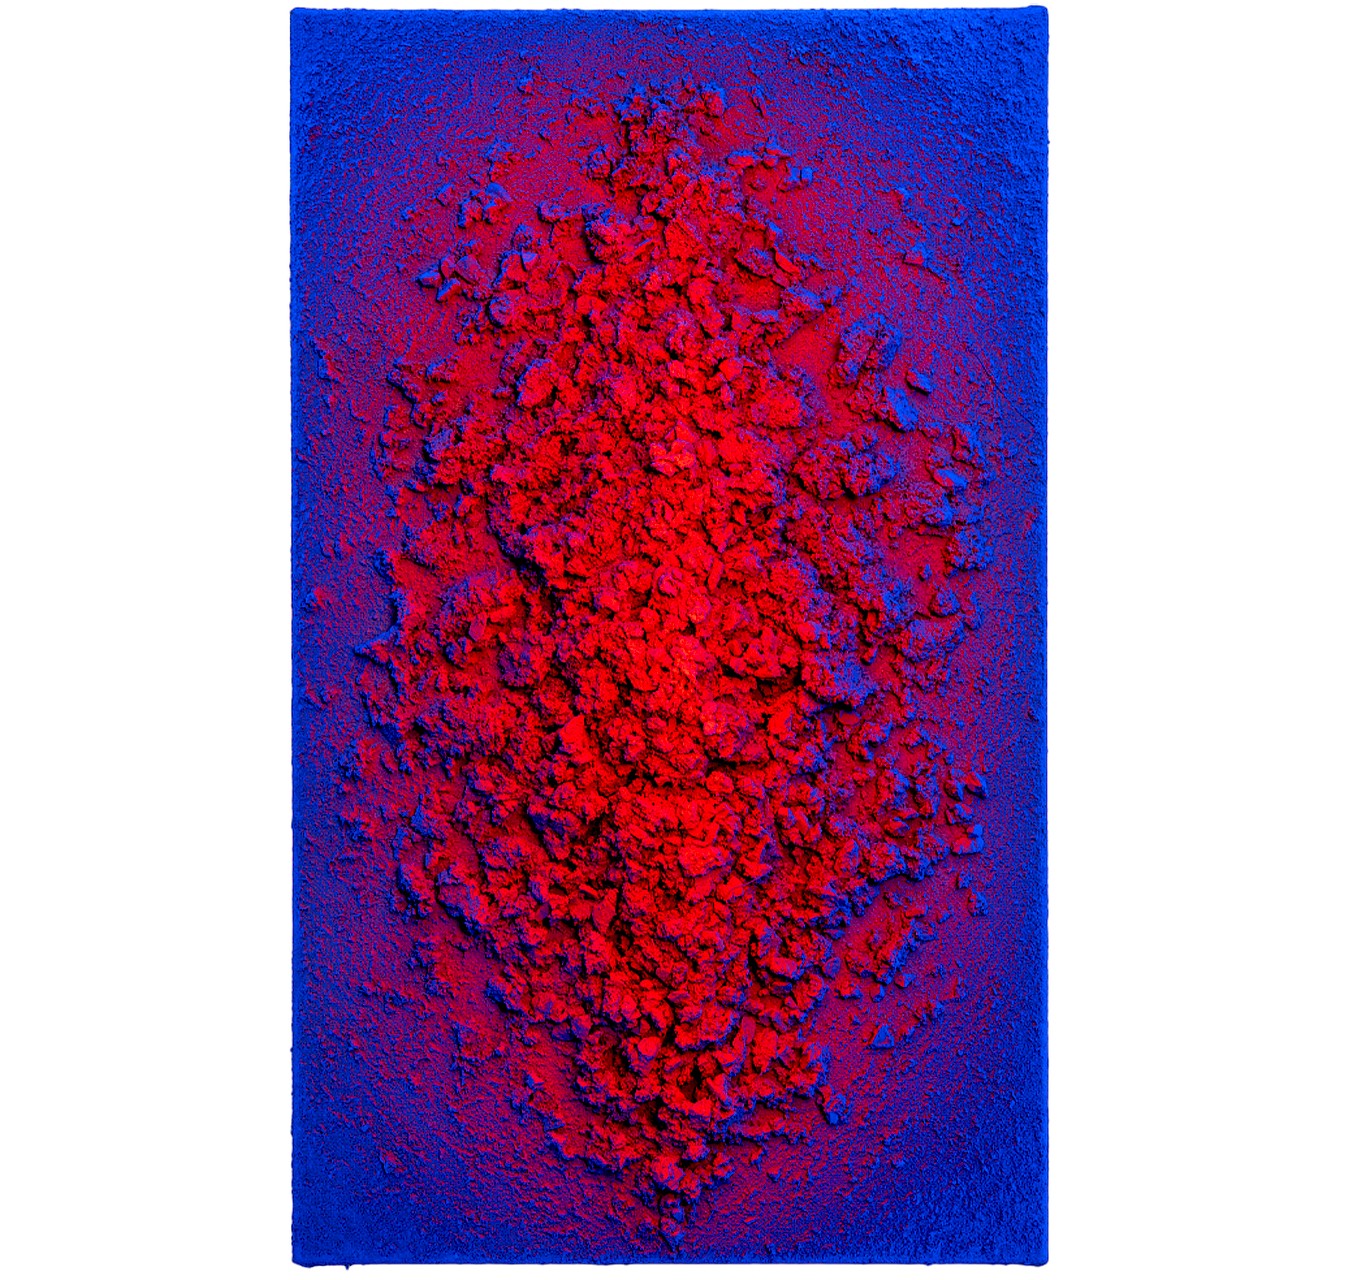 Interstellar Red Blue 17.40 - SAMUEL DEJONG - Galeries Bartoux